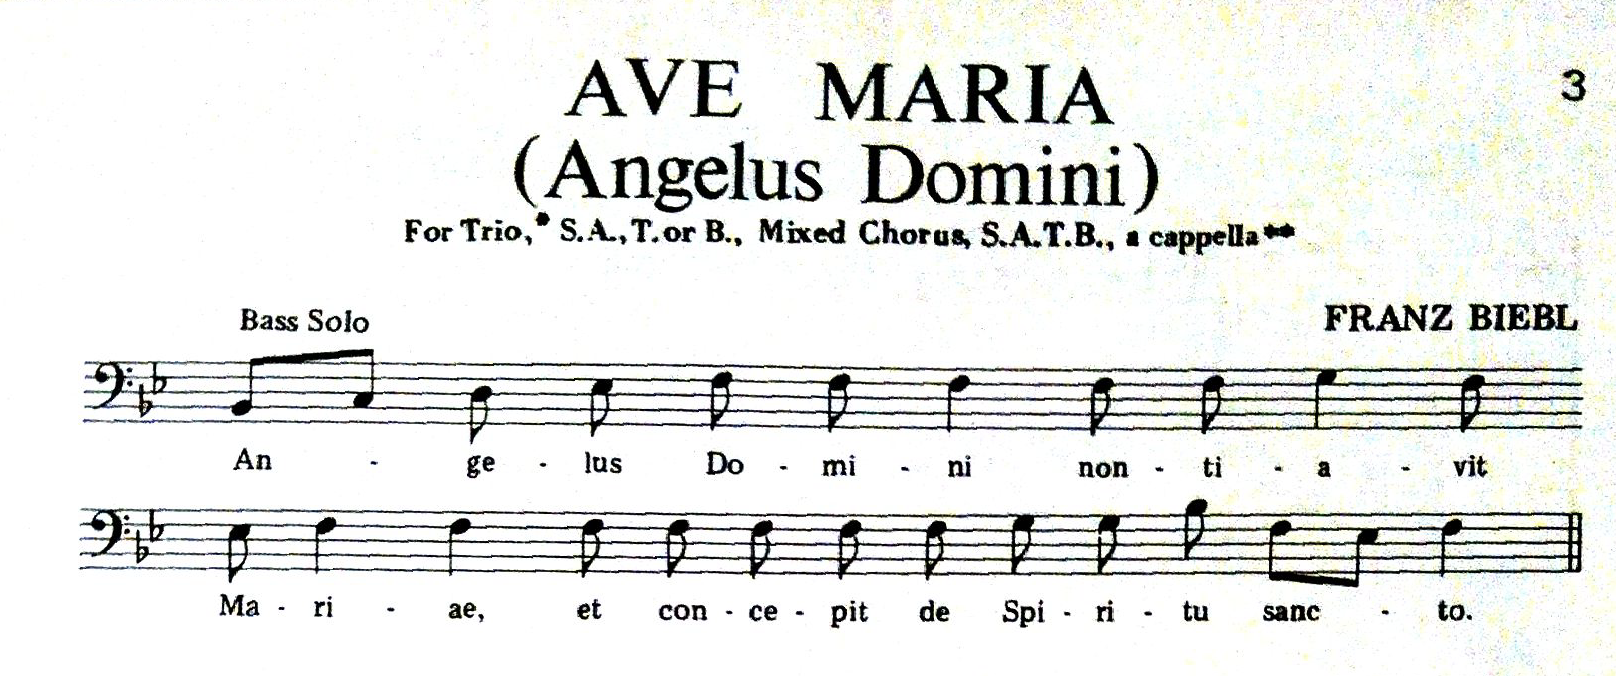 Ave Maria – Franz Biebl SSAATTB